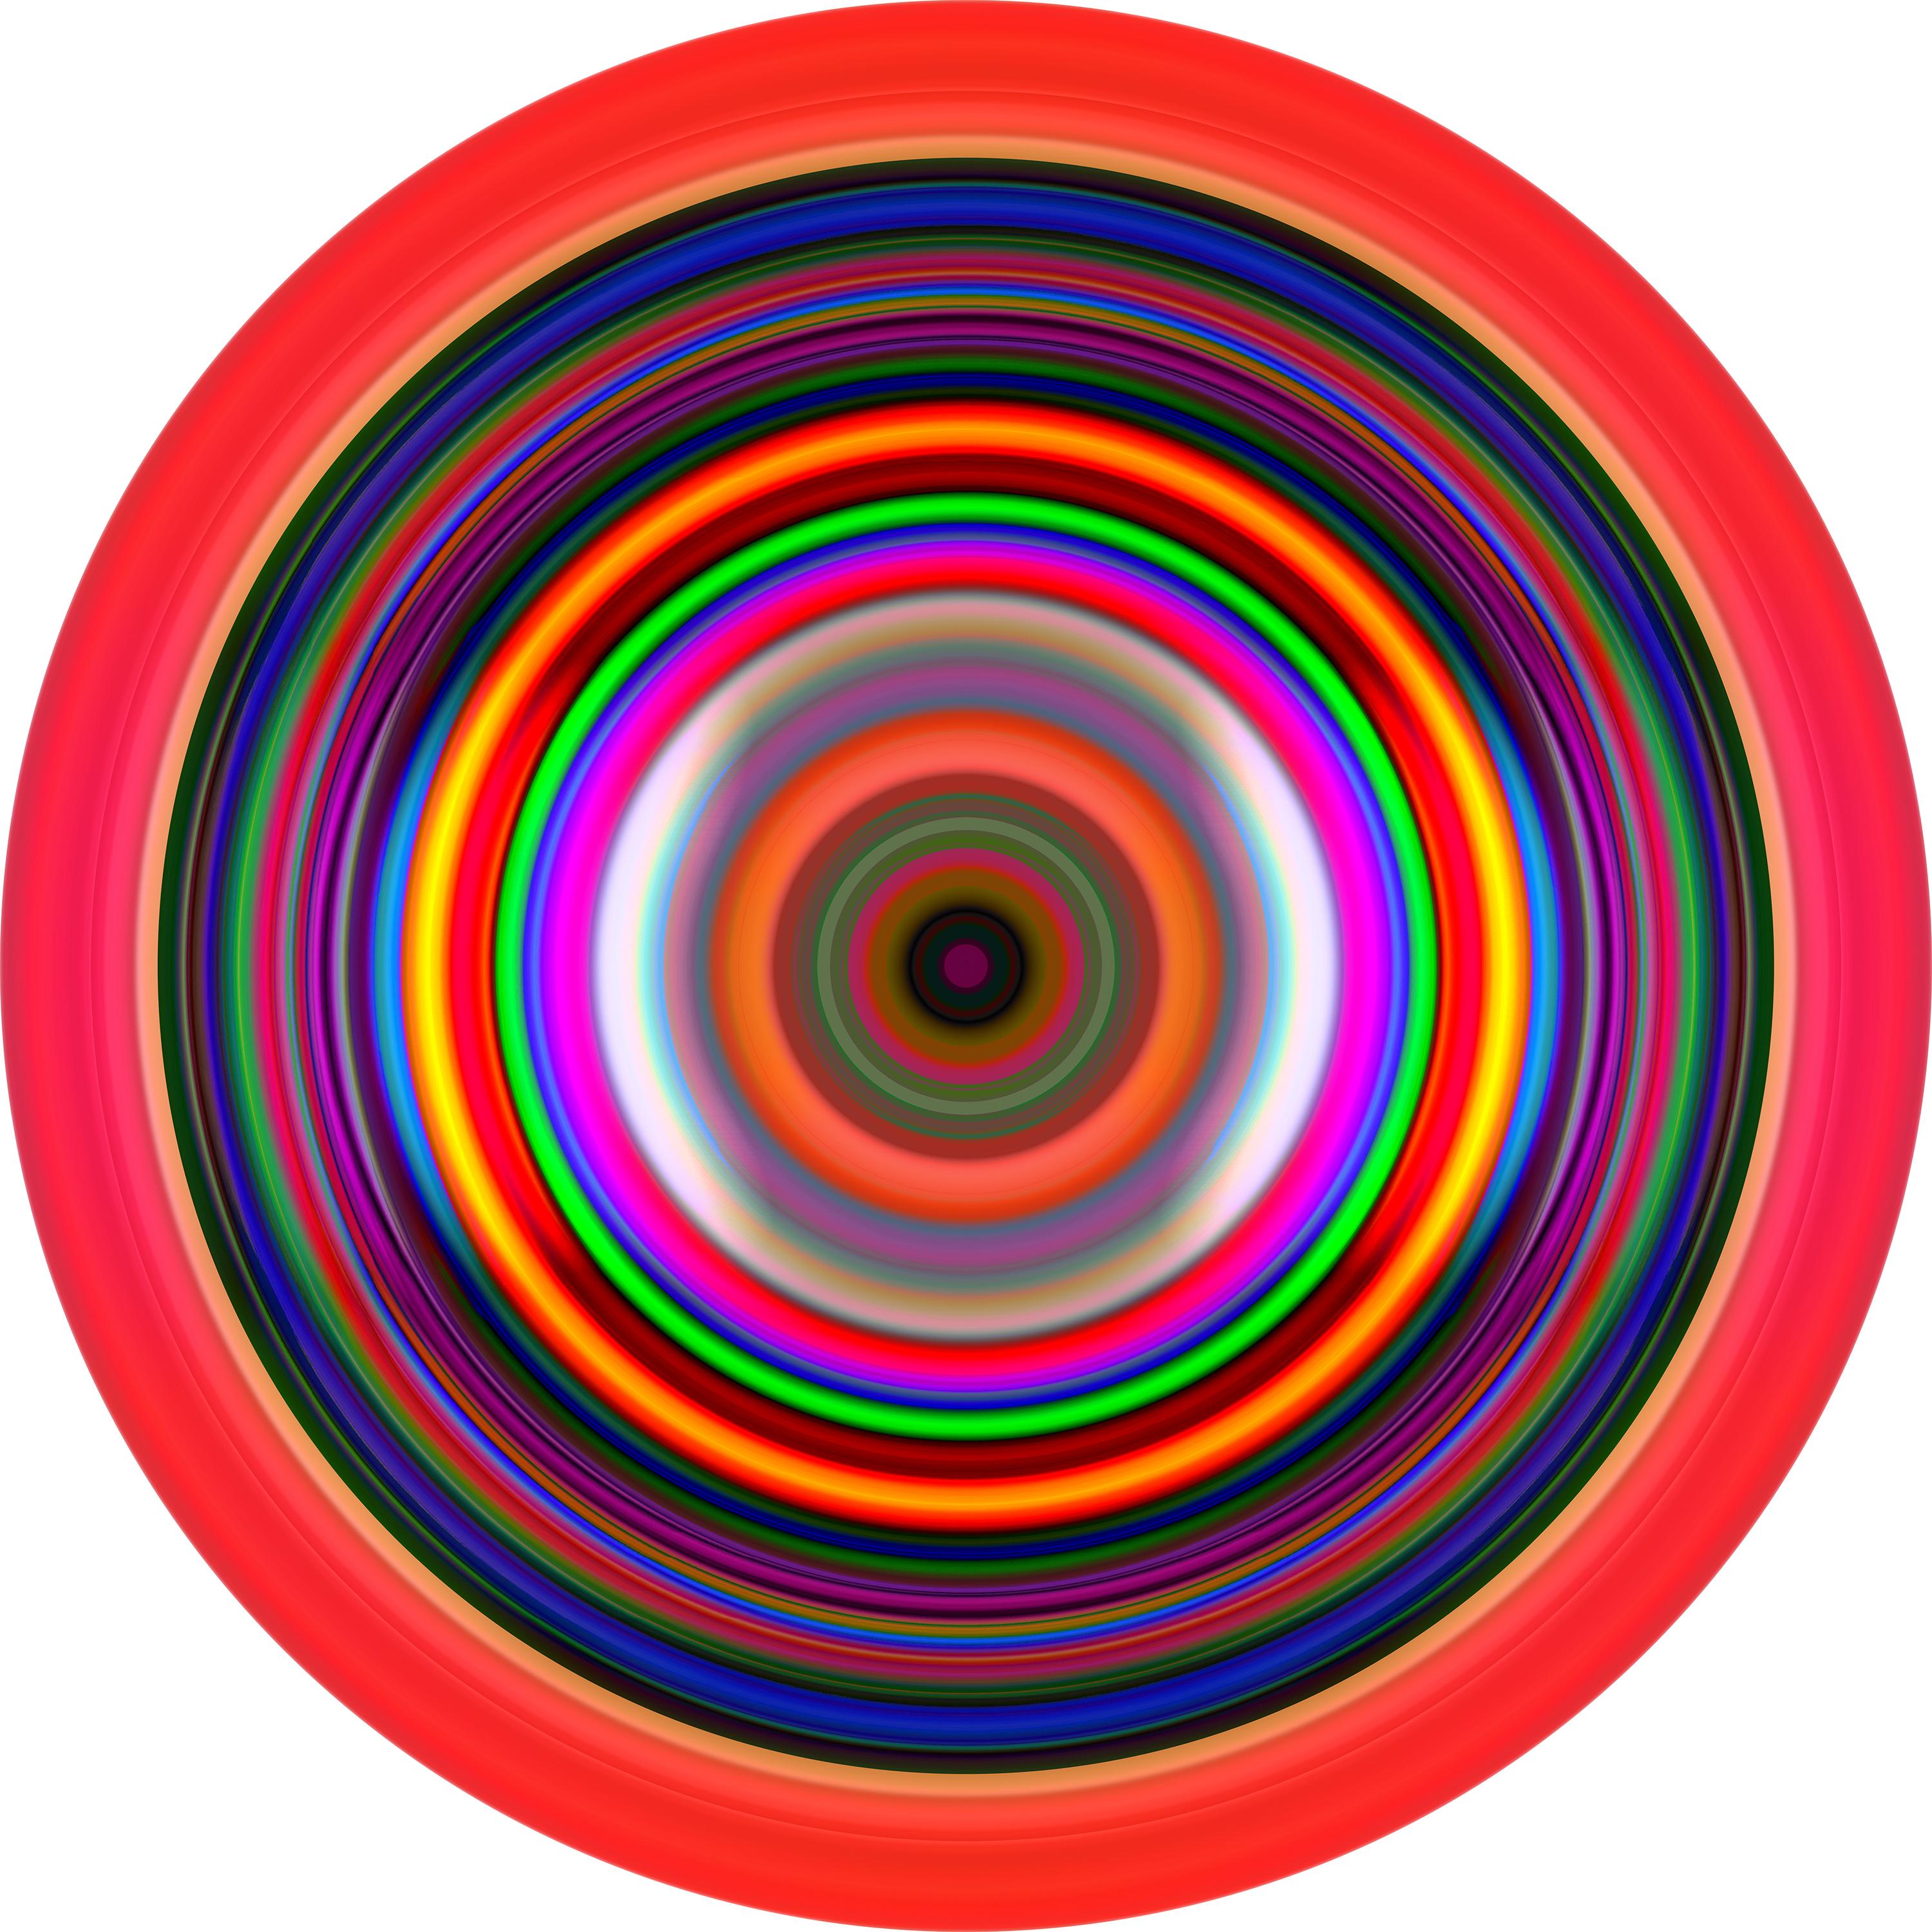 "Lucid" Vibrantly Colored Circle Painting / Resin on Wood / Rainbow Bullseye   - Mixed Media Art by Franco DeFrancesca